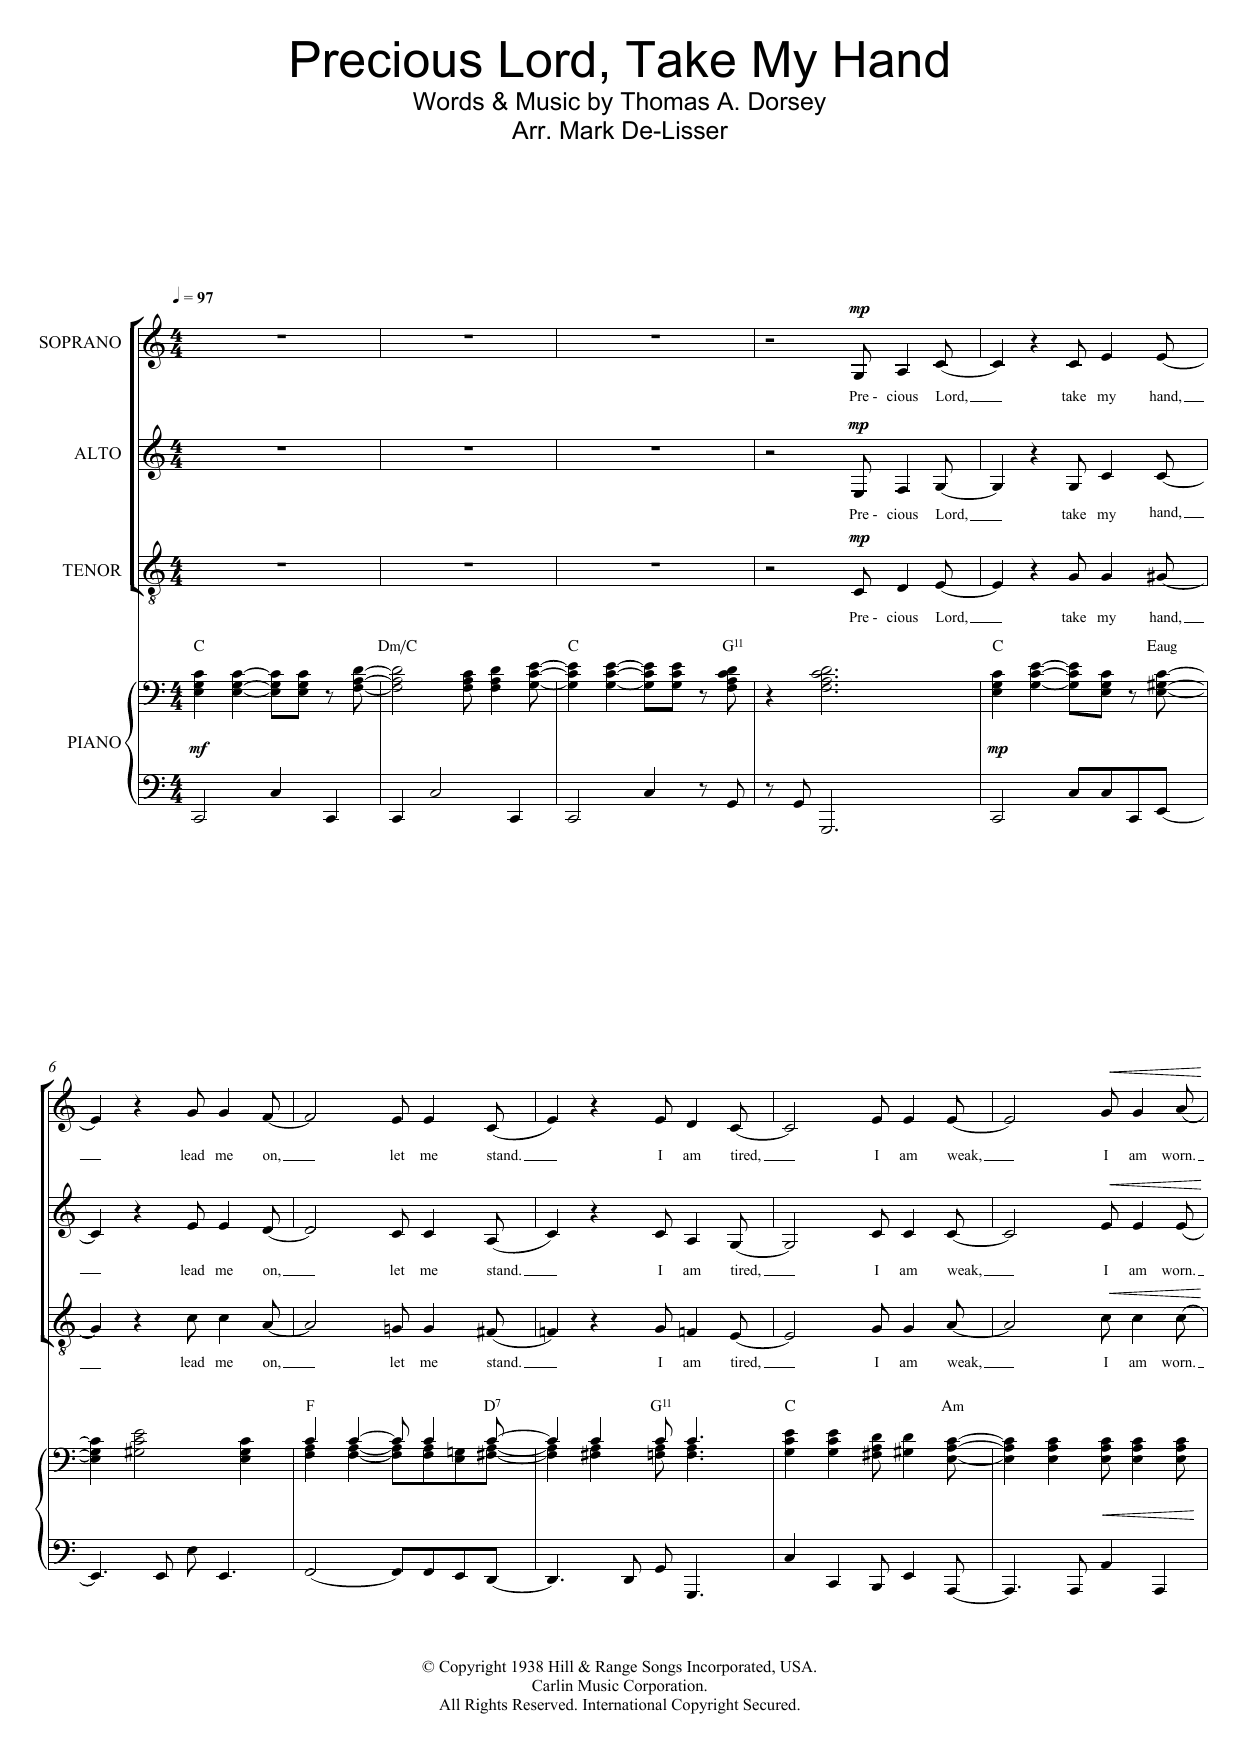 Mahalia Jackson Precious Lord, Take My Hand (Take My Hand, Precious Lord) (arr. Mark De-Lisser) Sheet Music Notes & Chords for SAT - Download or Print PDF